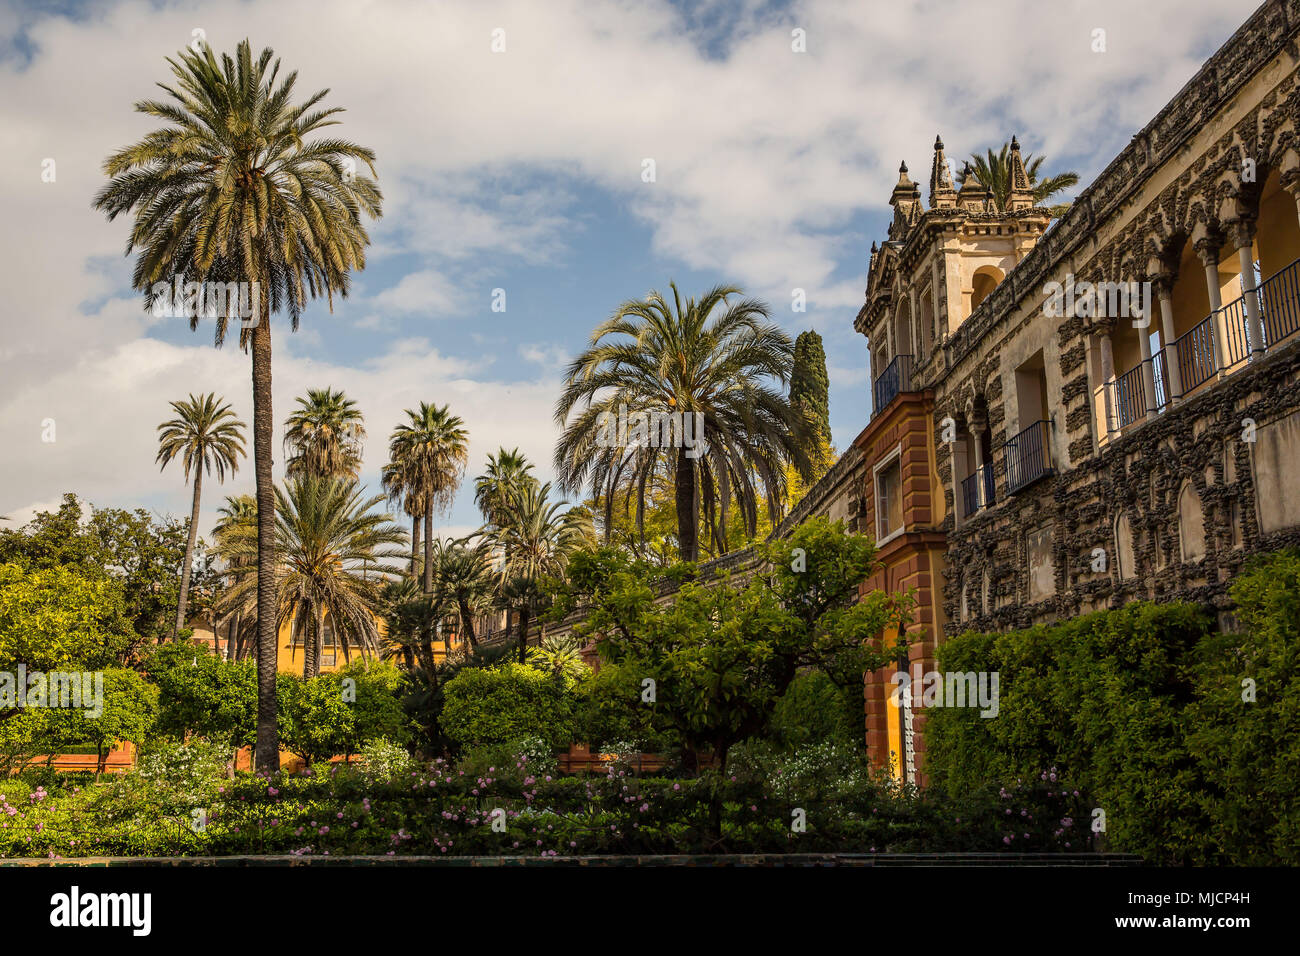 Europa, Spanien, Andalusien, Sevilla, Real Alcazar, Garten, Royal Garden, Palmen, Garten Architektur, Stockfoto